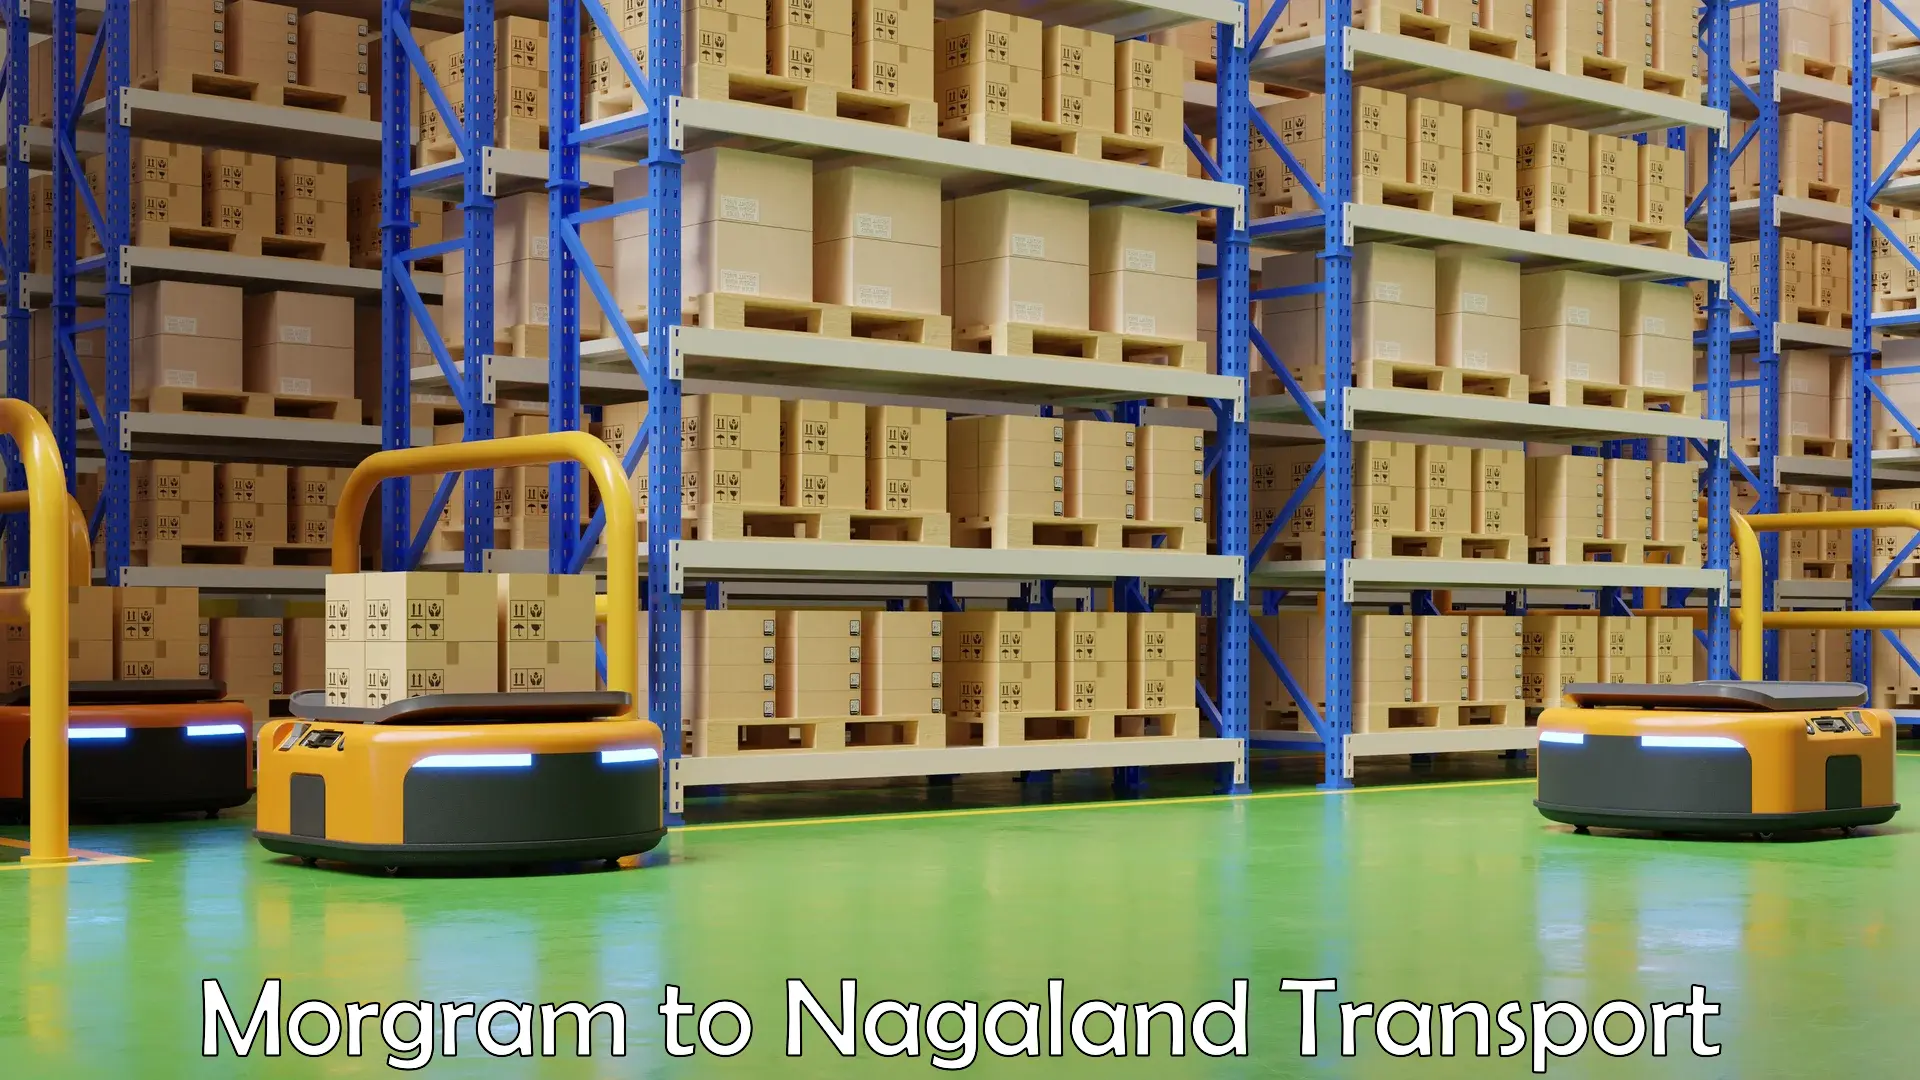 Transport shared services Morgram to Nagaland